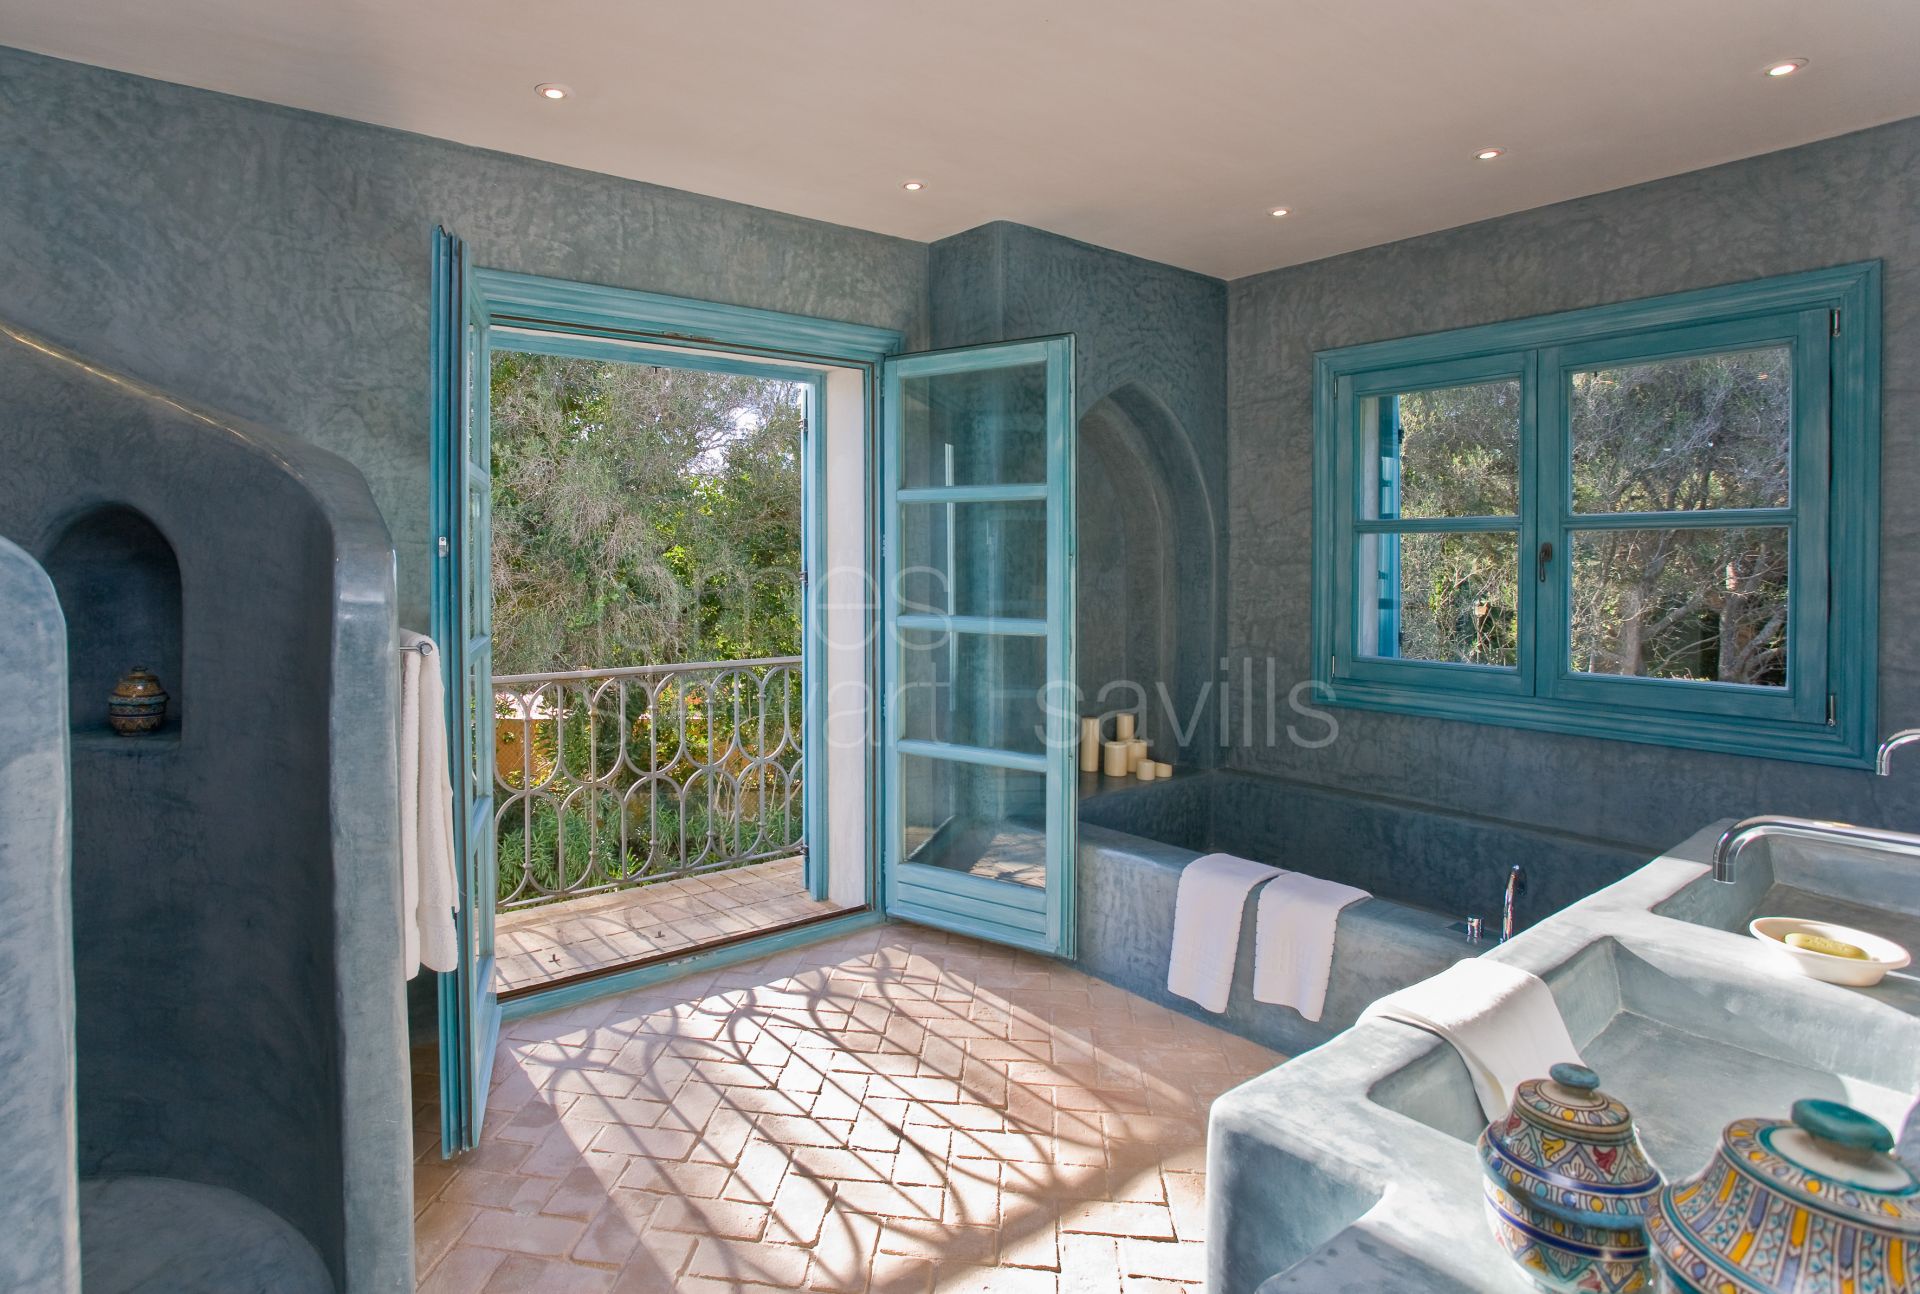 Beautiful cortijo style villa with a Provençal feel